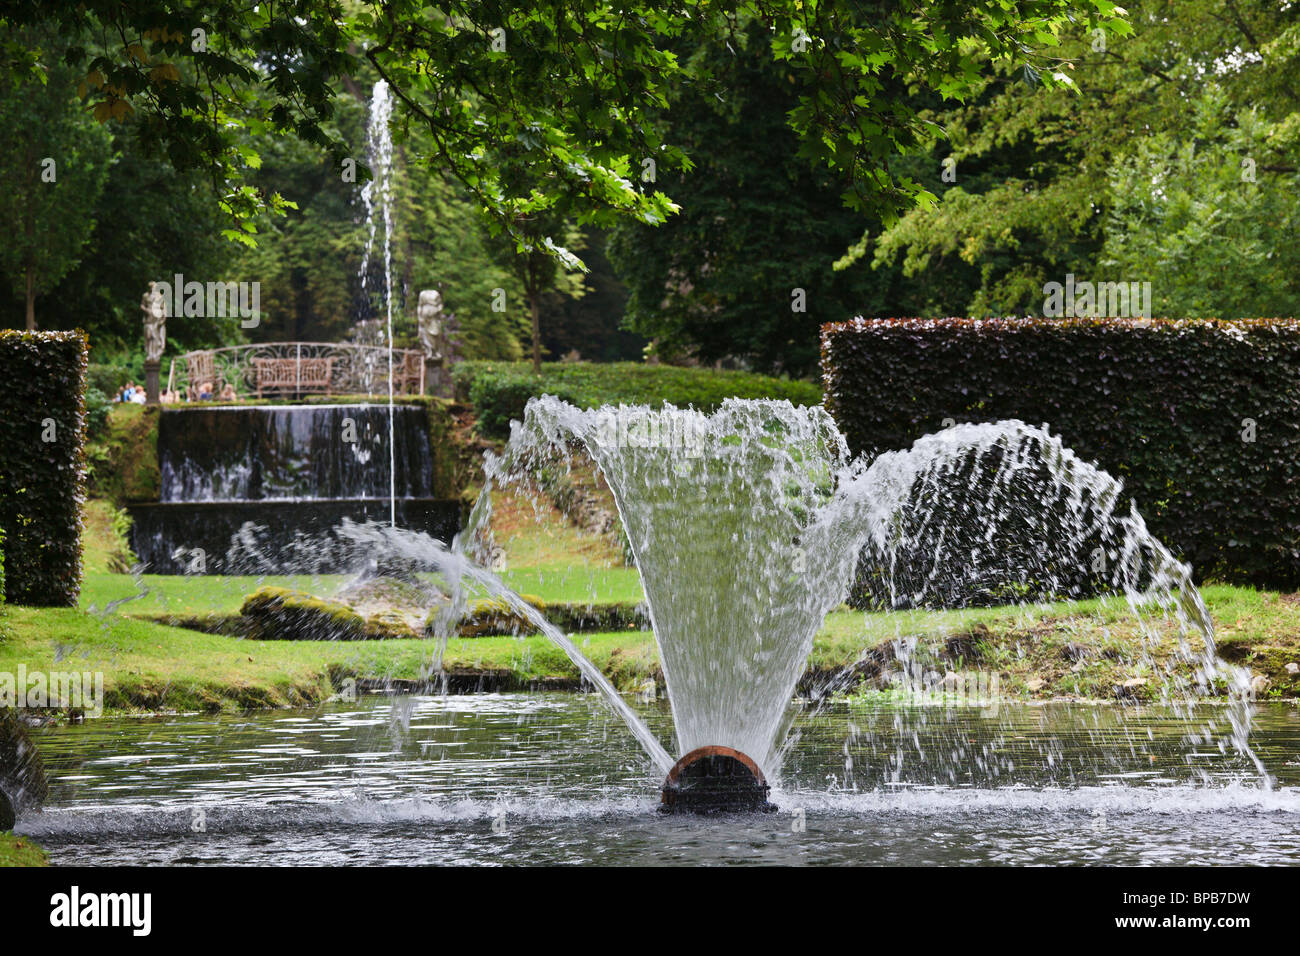 Gardens of Annevoie (Les Jardins d'Annevoie), Annevoie-Rouillon, Wallonia, Belgium Stock Photo